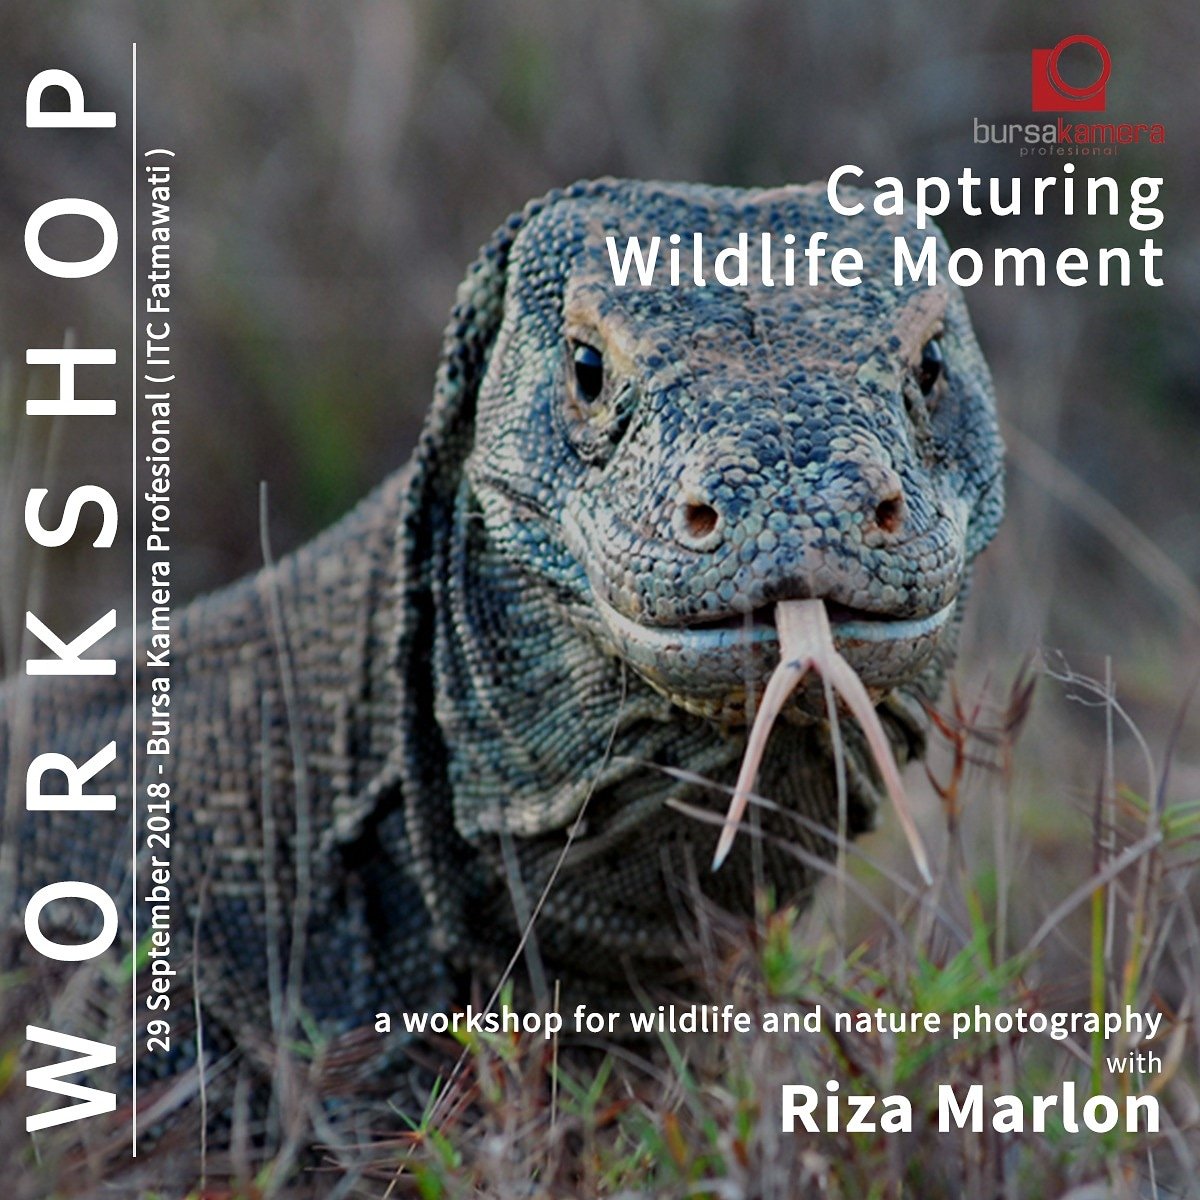 Capturing Wildlife Moment with Riza Marlon